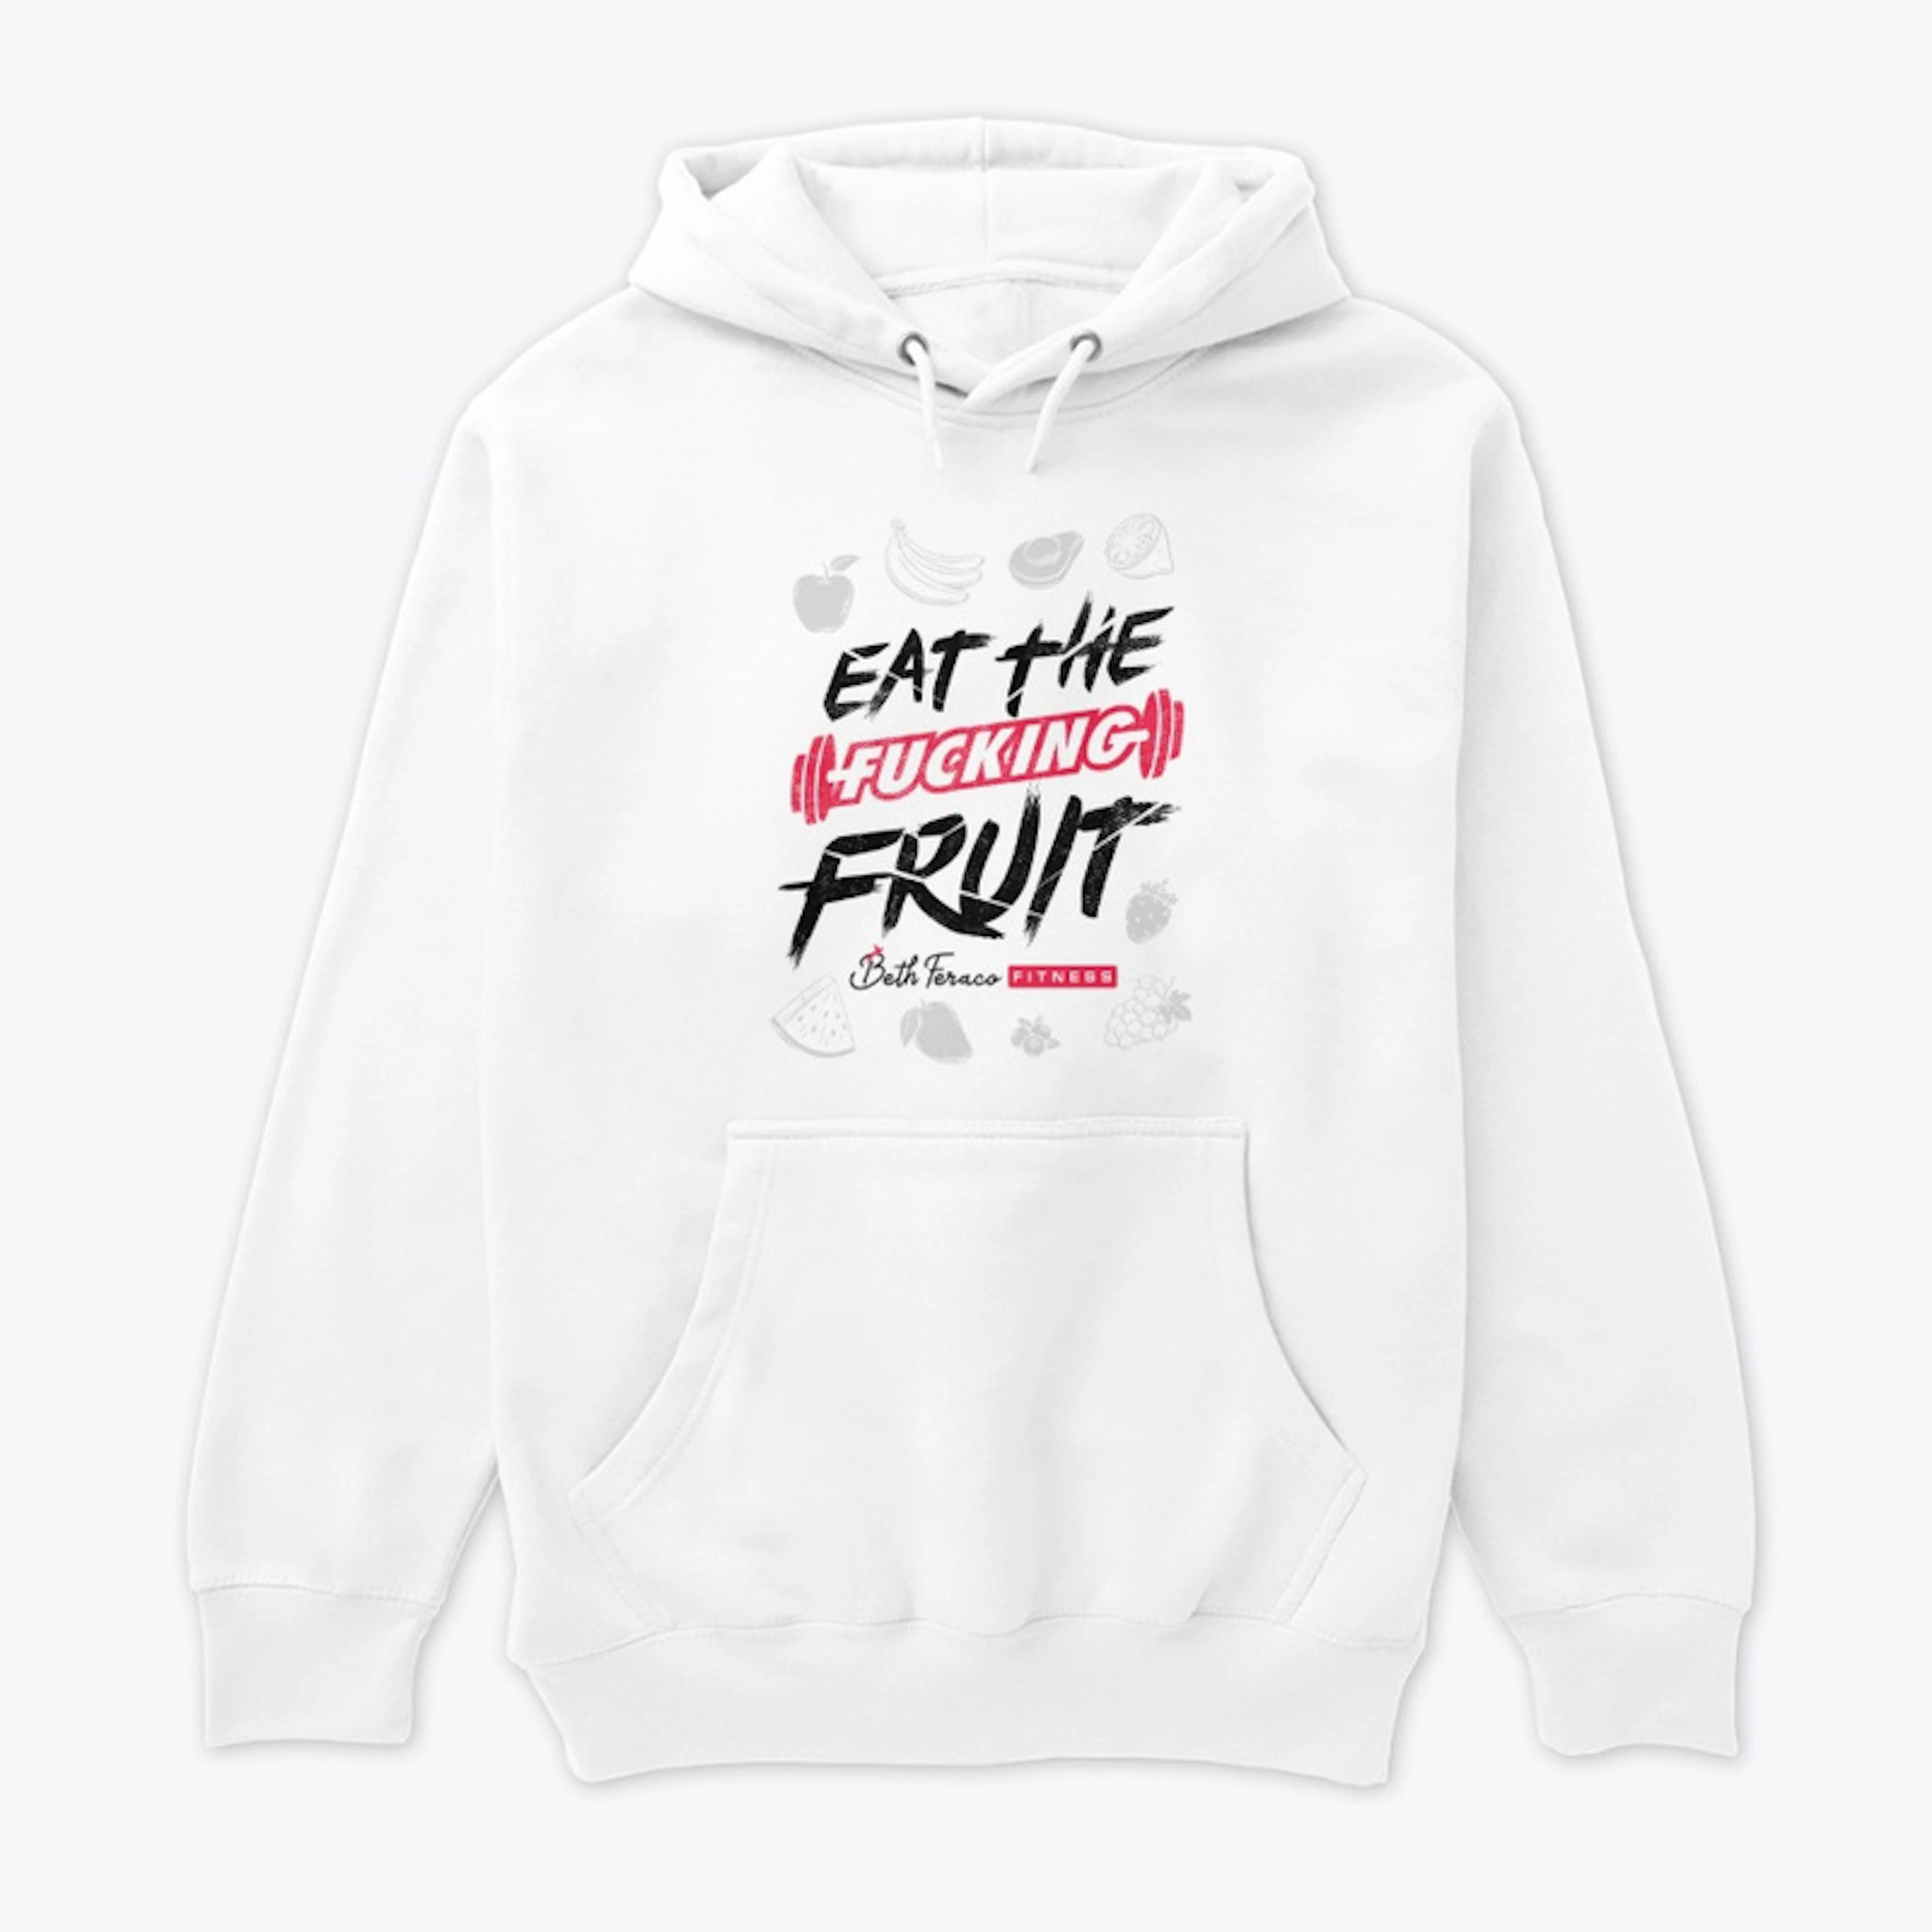 Eat the f#cking fruit